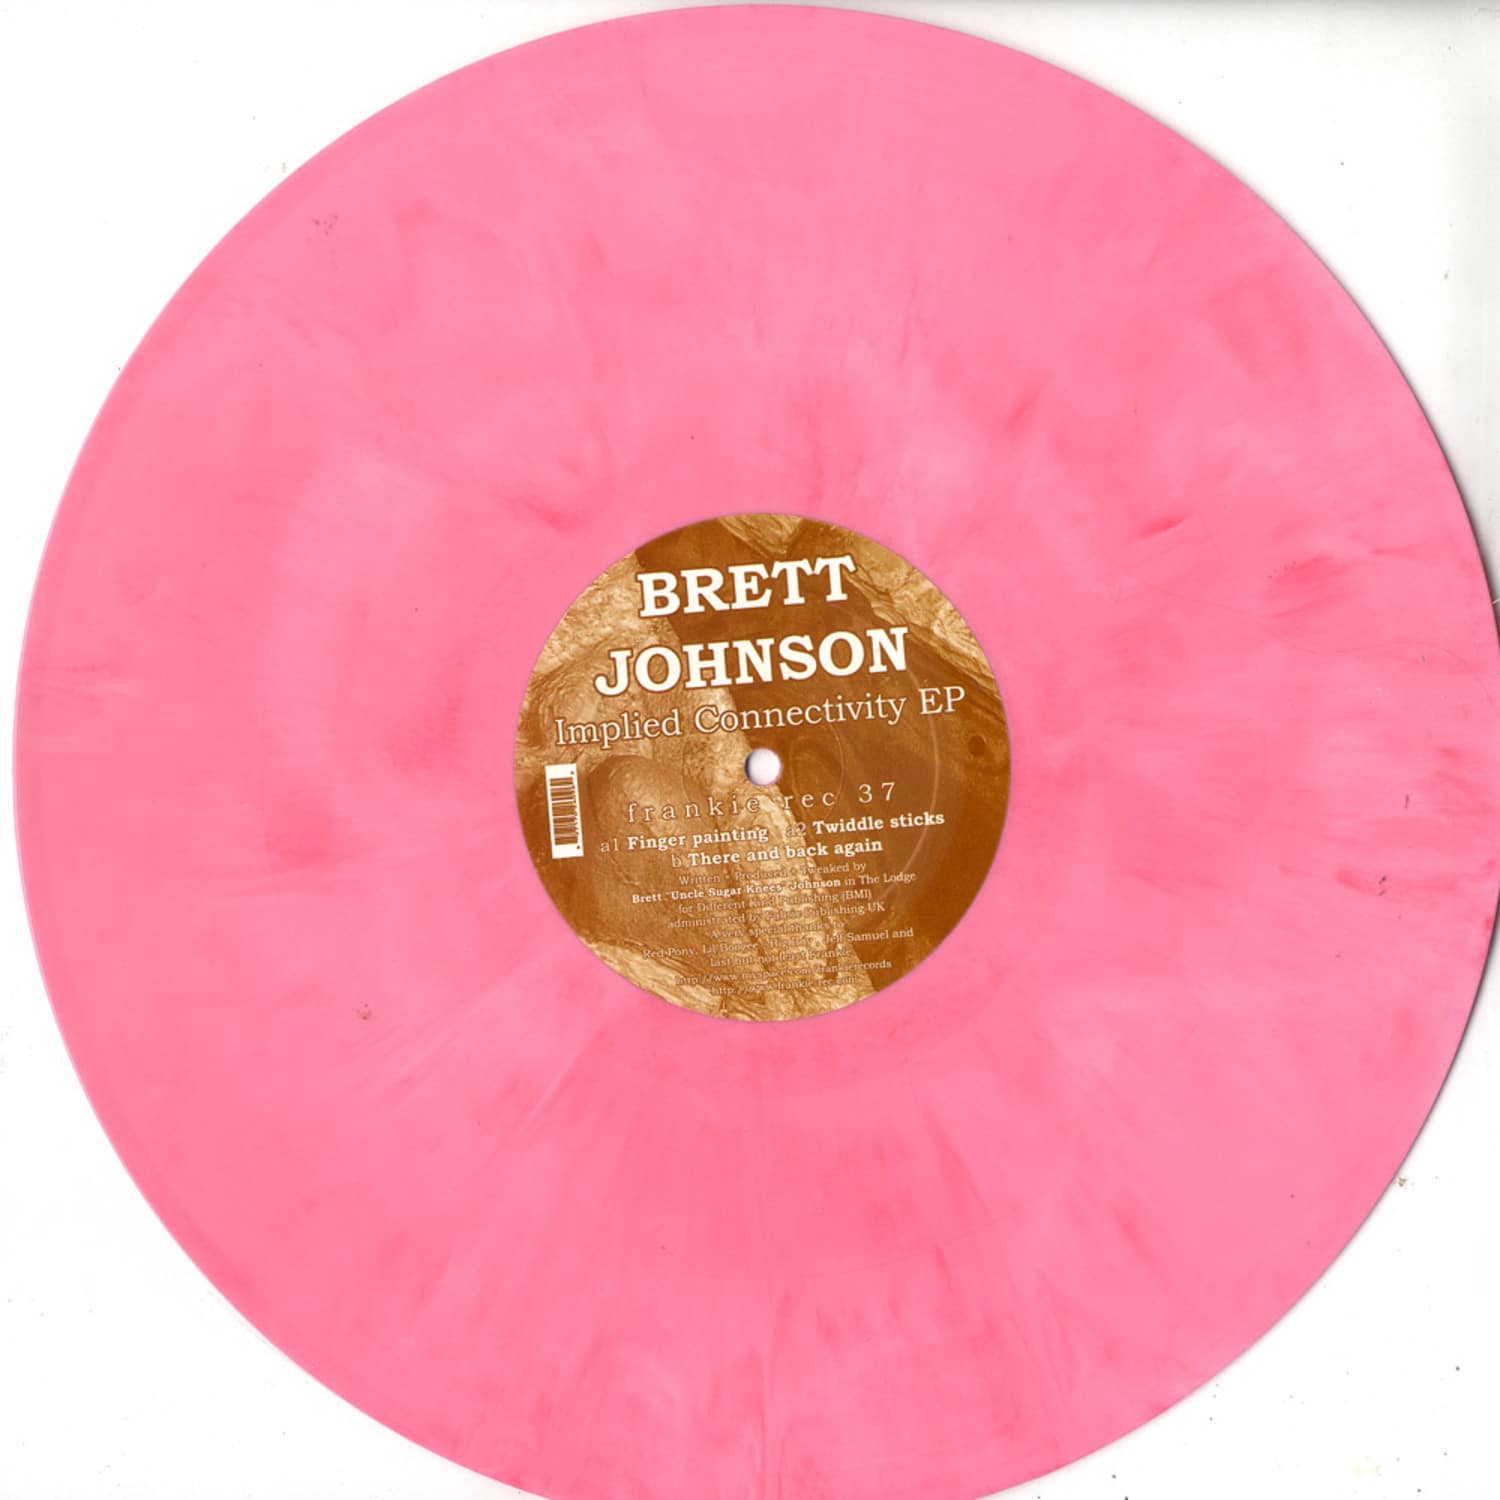 Brett Johnson - IMPLIED CONNECTIVITY EP 